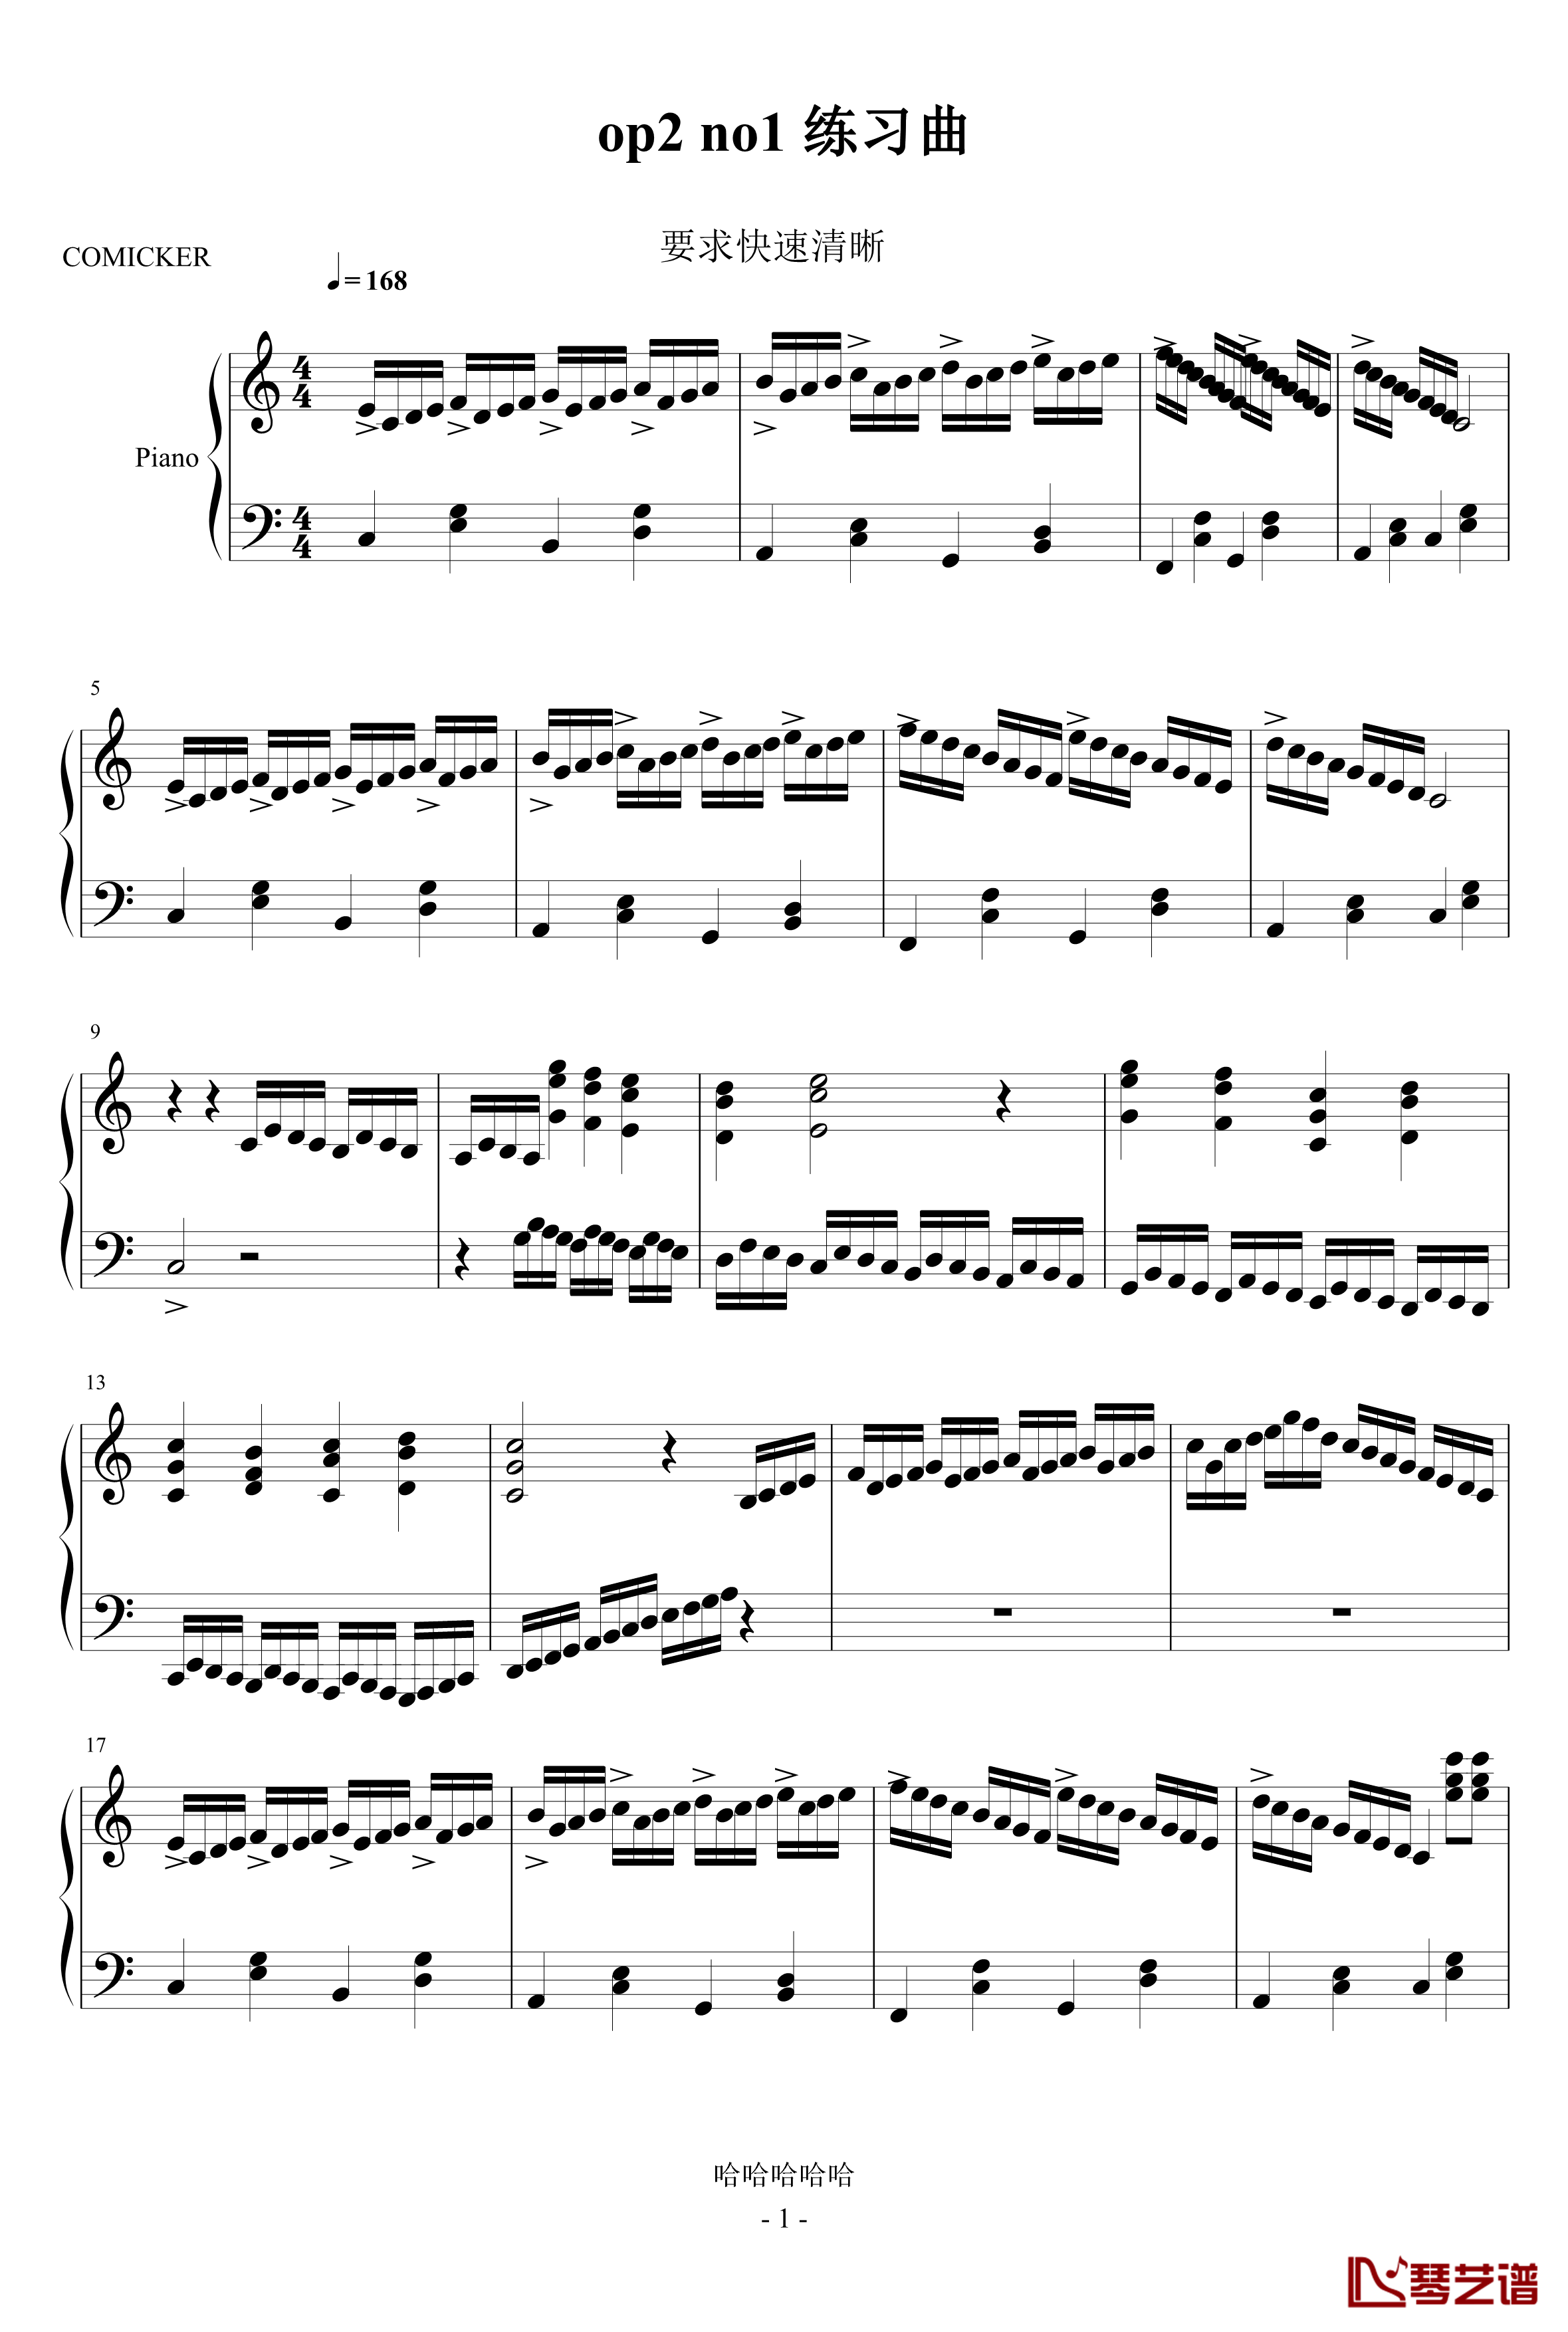 OP2 NO1练习曲钢琴谱-COMICKE1